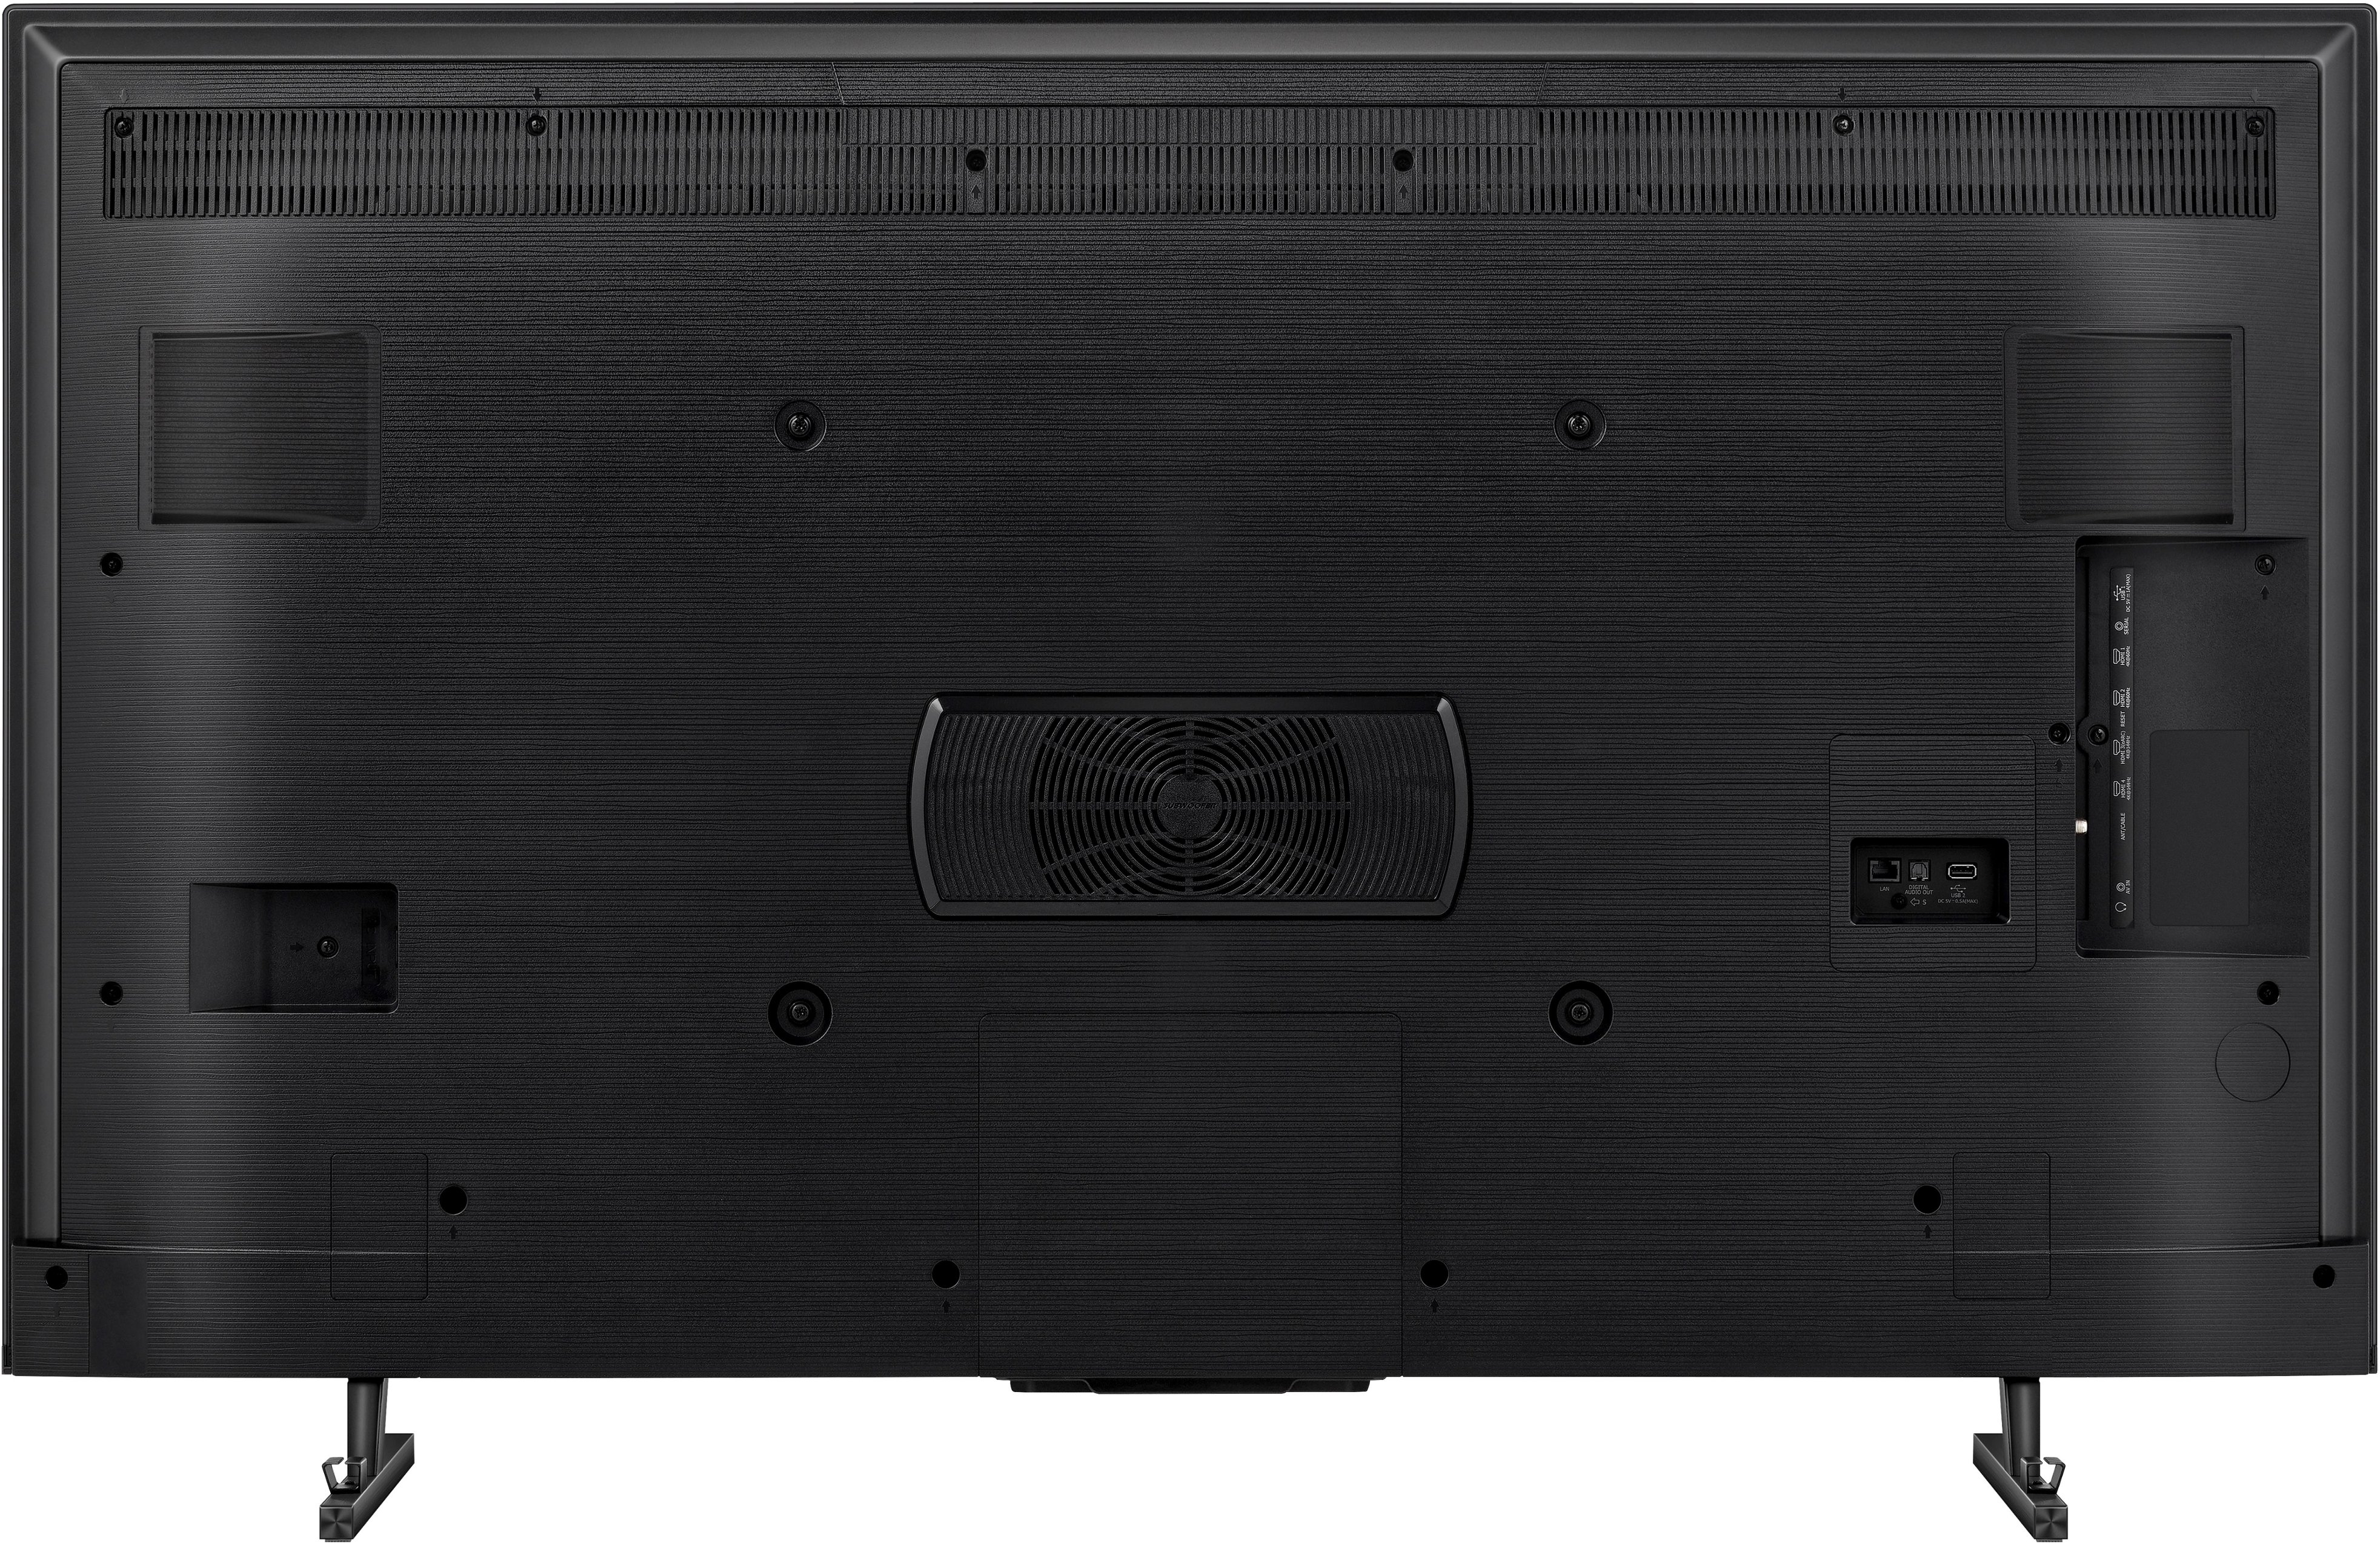 Hisense 100 Class U8 Series Mini-LED QLED 4K UHD Smart Google TV 100U8K -  Best Buy